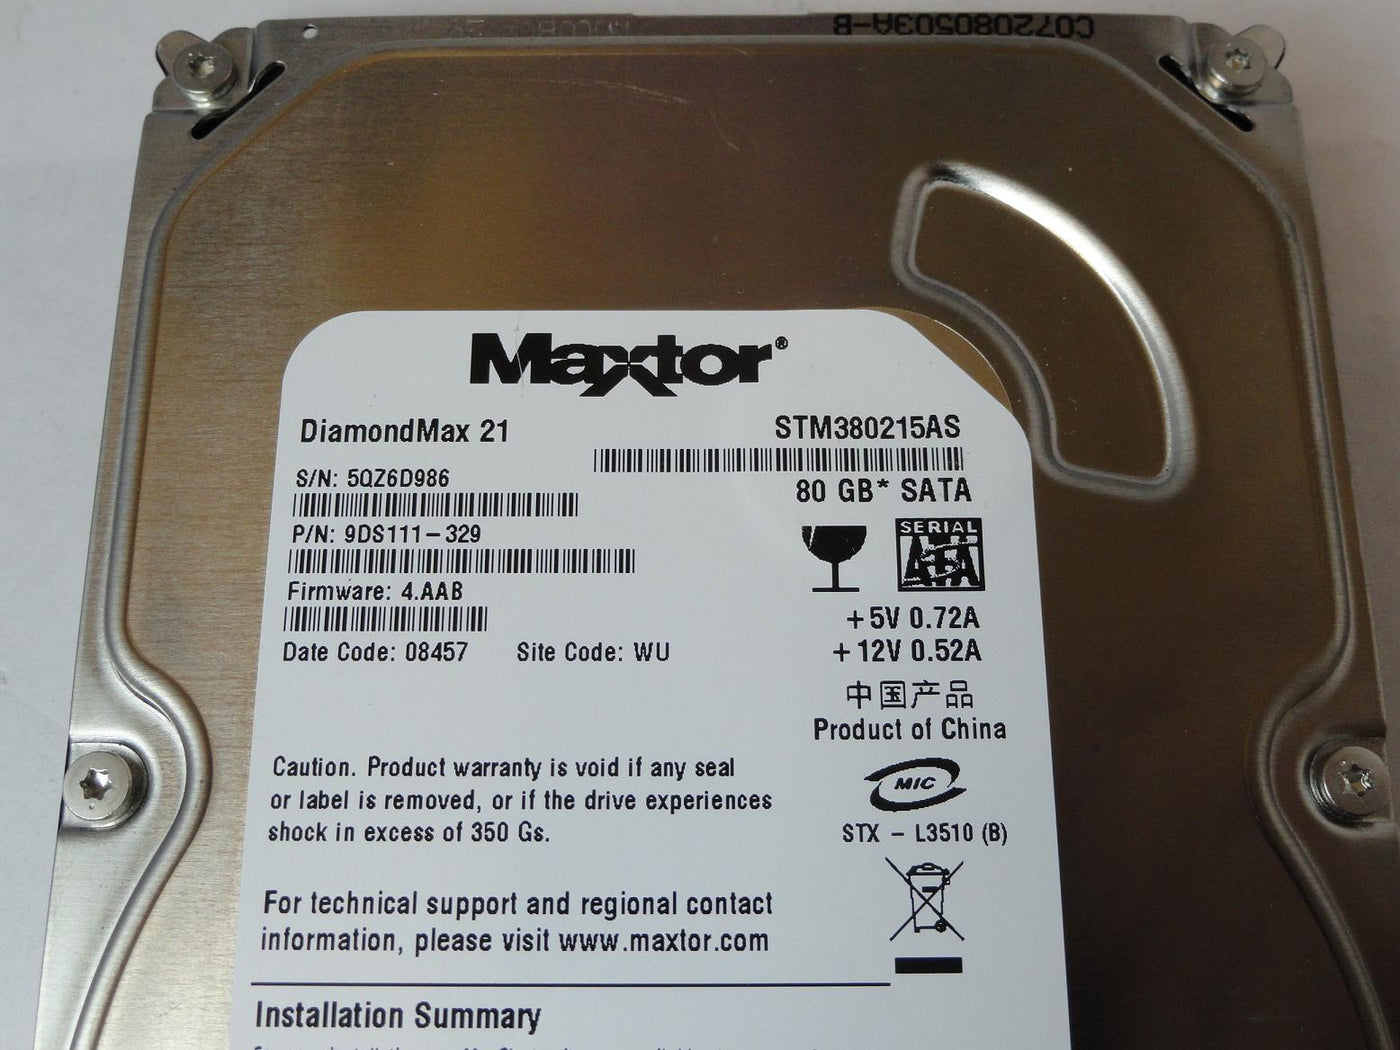 PR18947_9DS111-329_Maxtor 80GB SATA 7200rpm 3.5in HDD - Image3